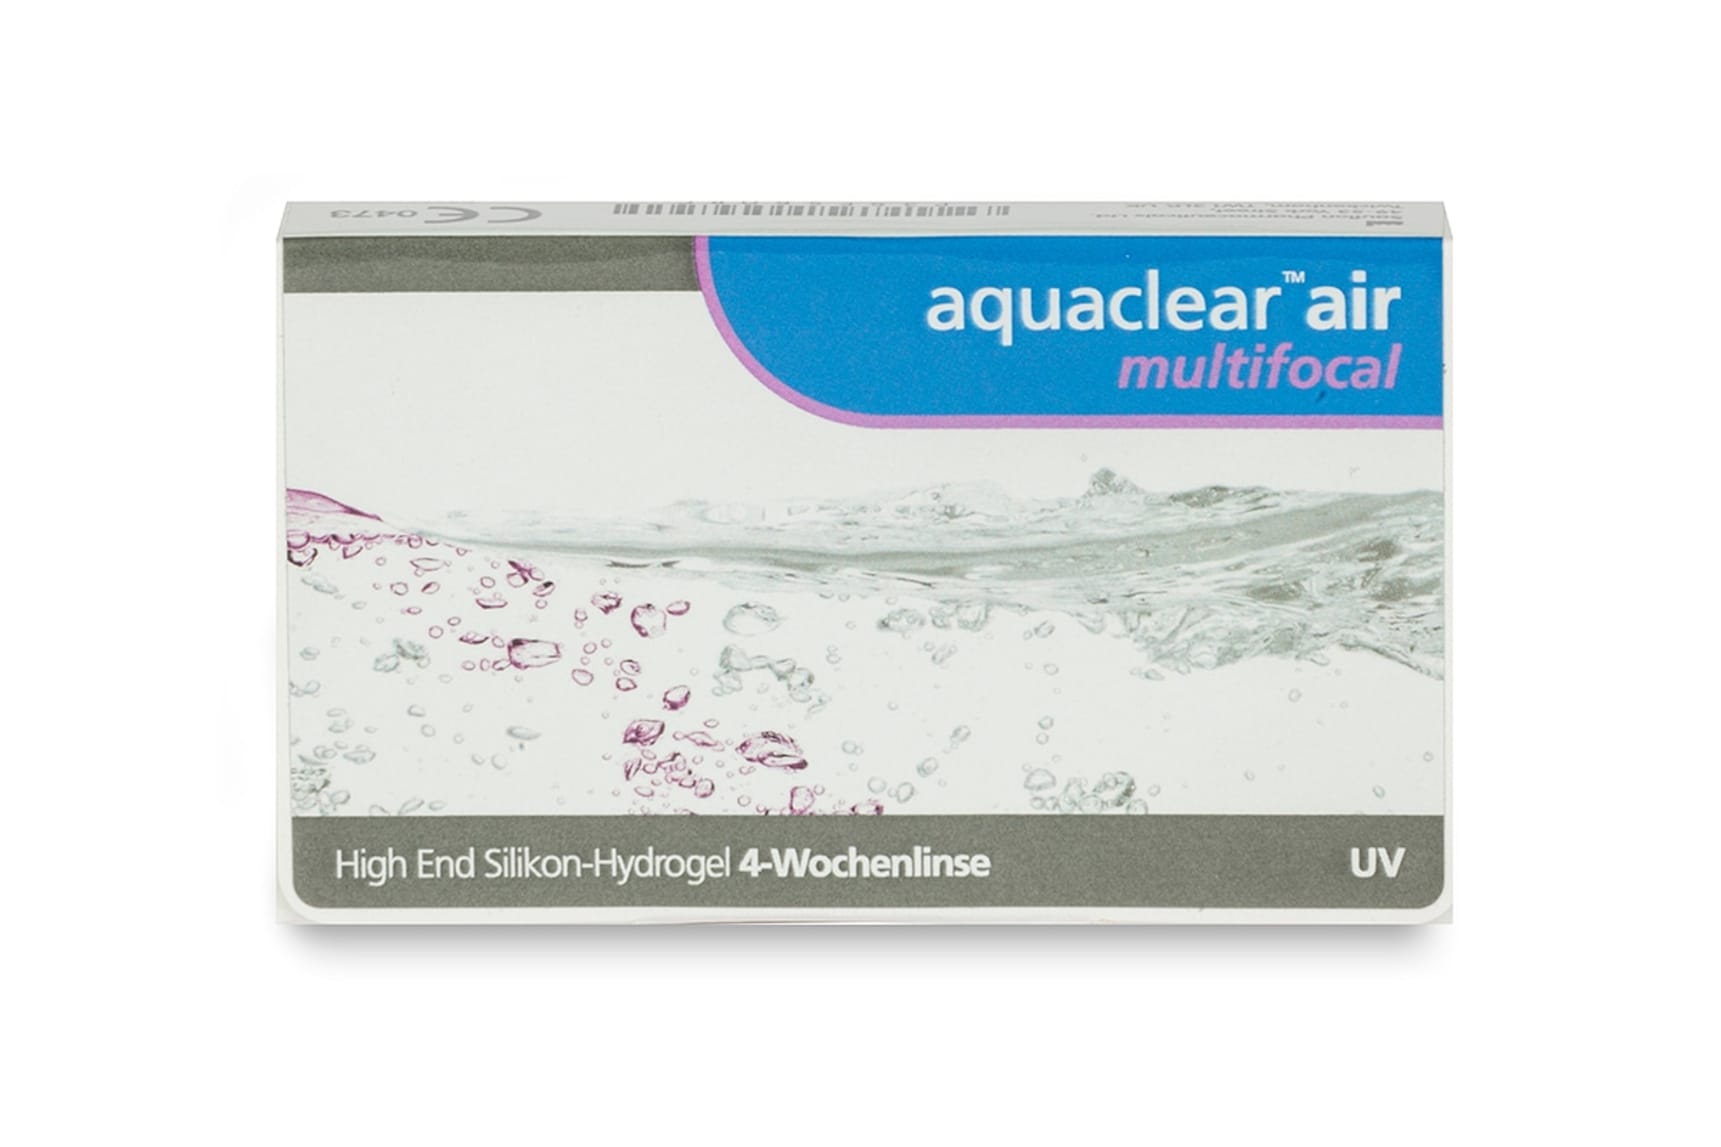 Aquaclear air multifocal